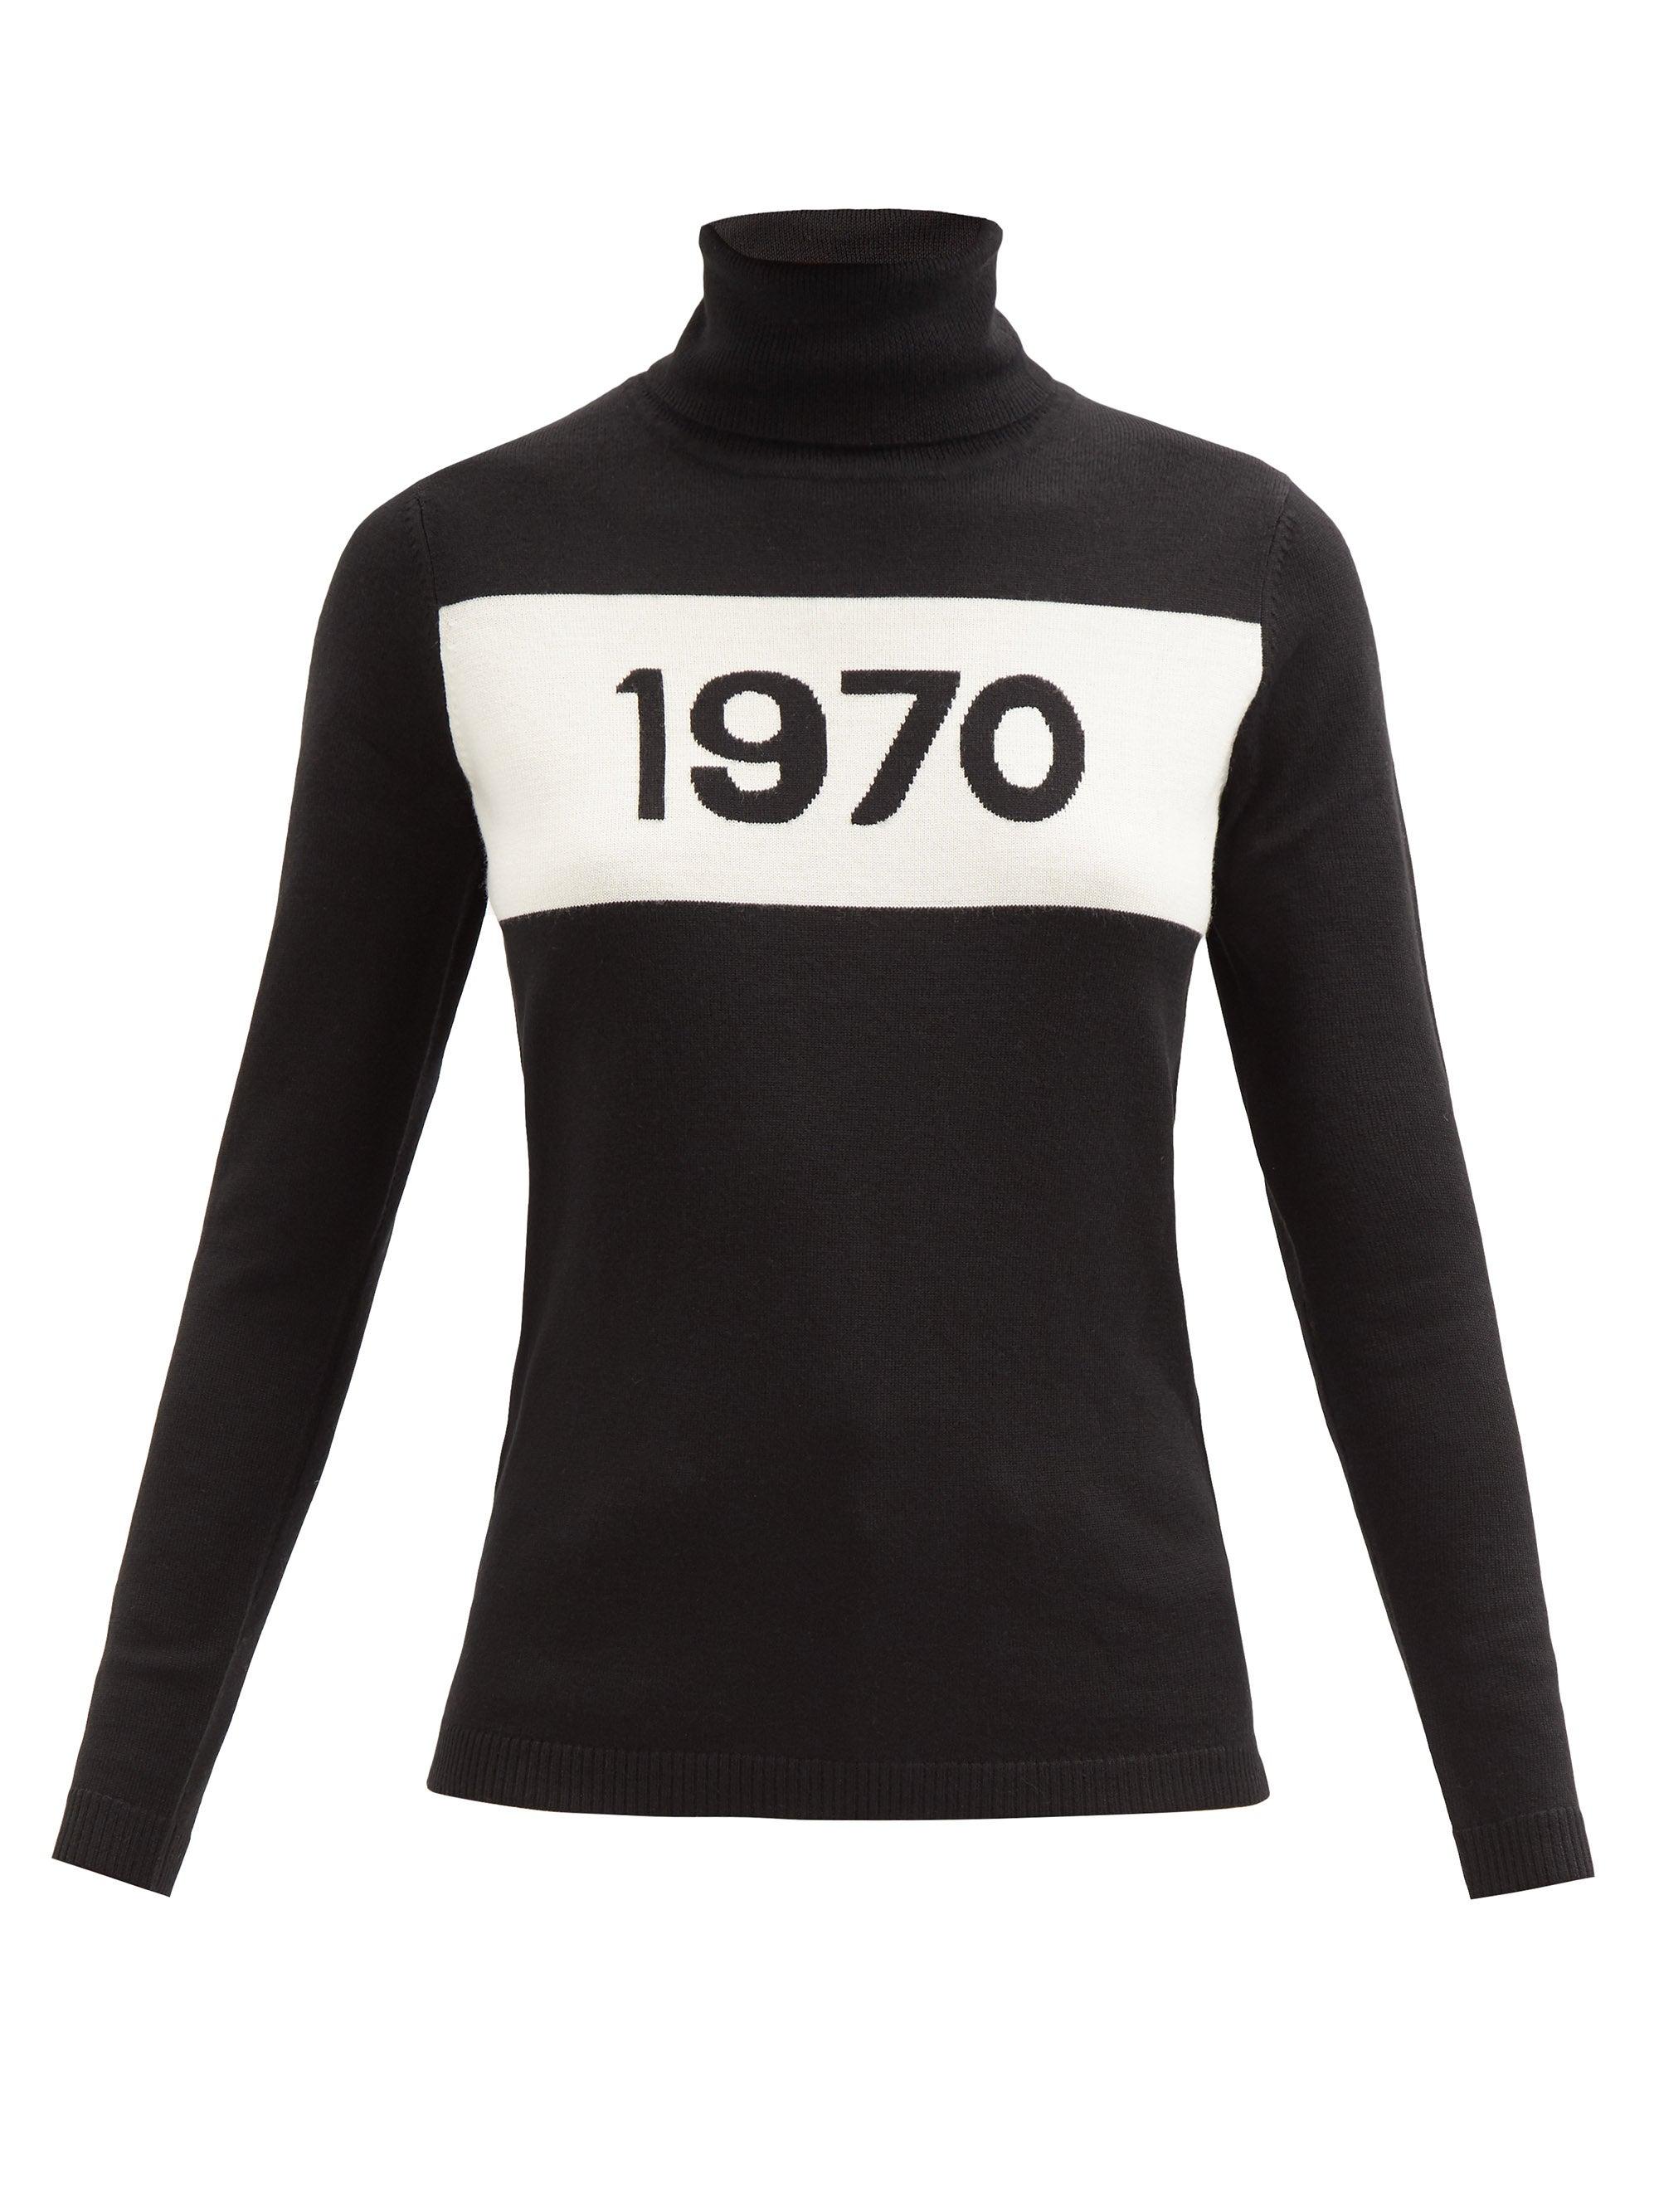 Bella Freud 1970-intarsia Wool Sweater in Black - Lyst